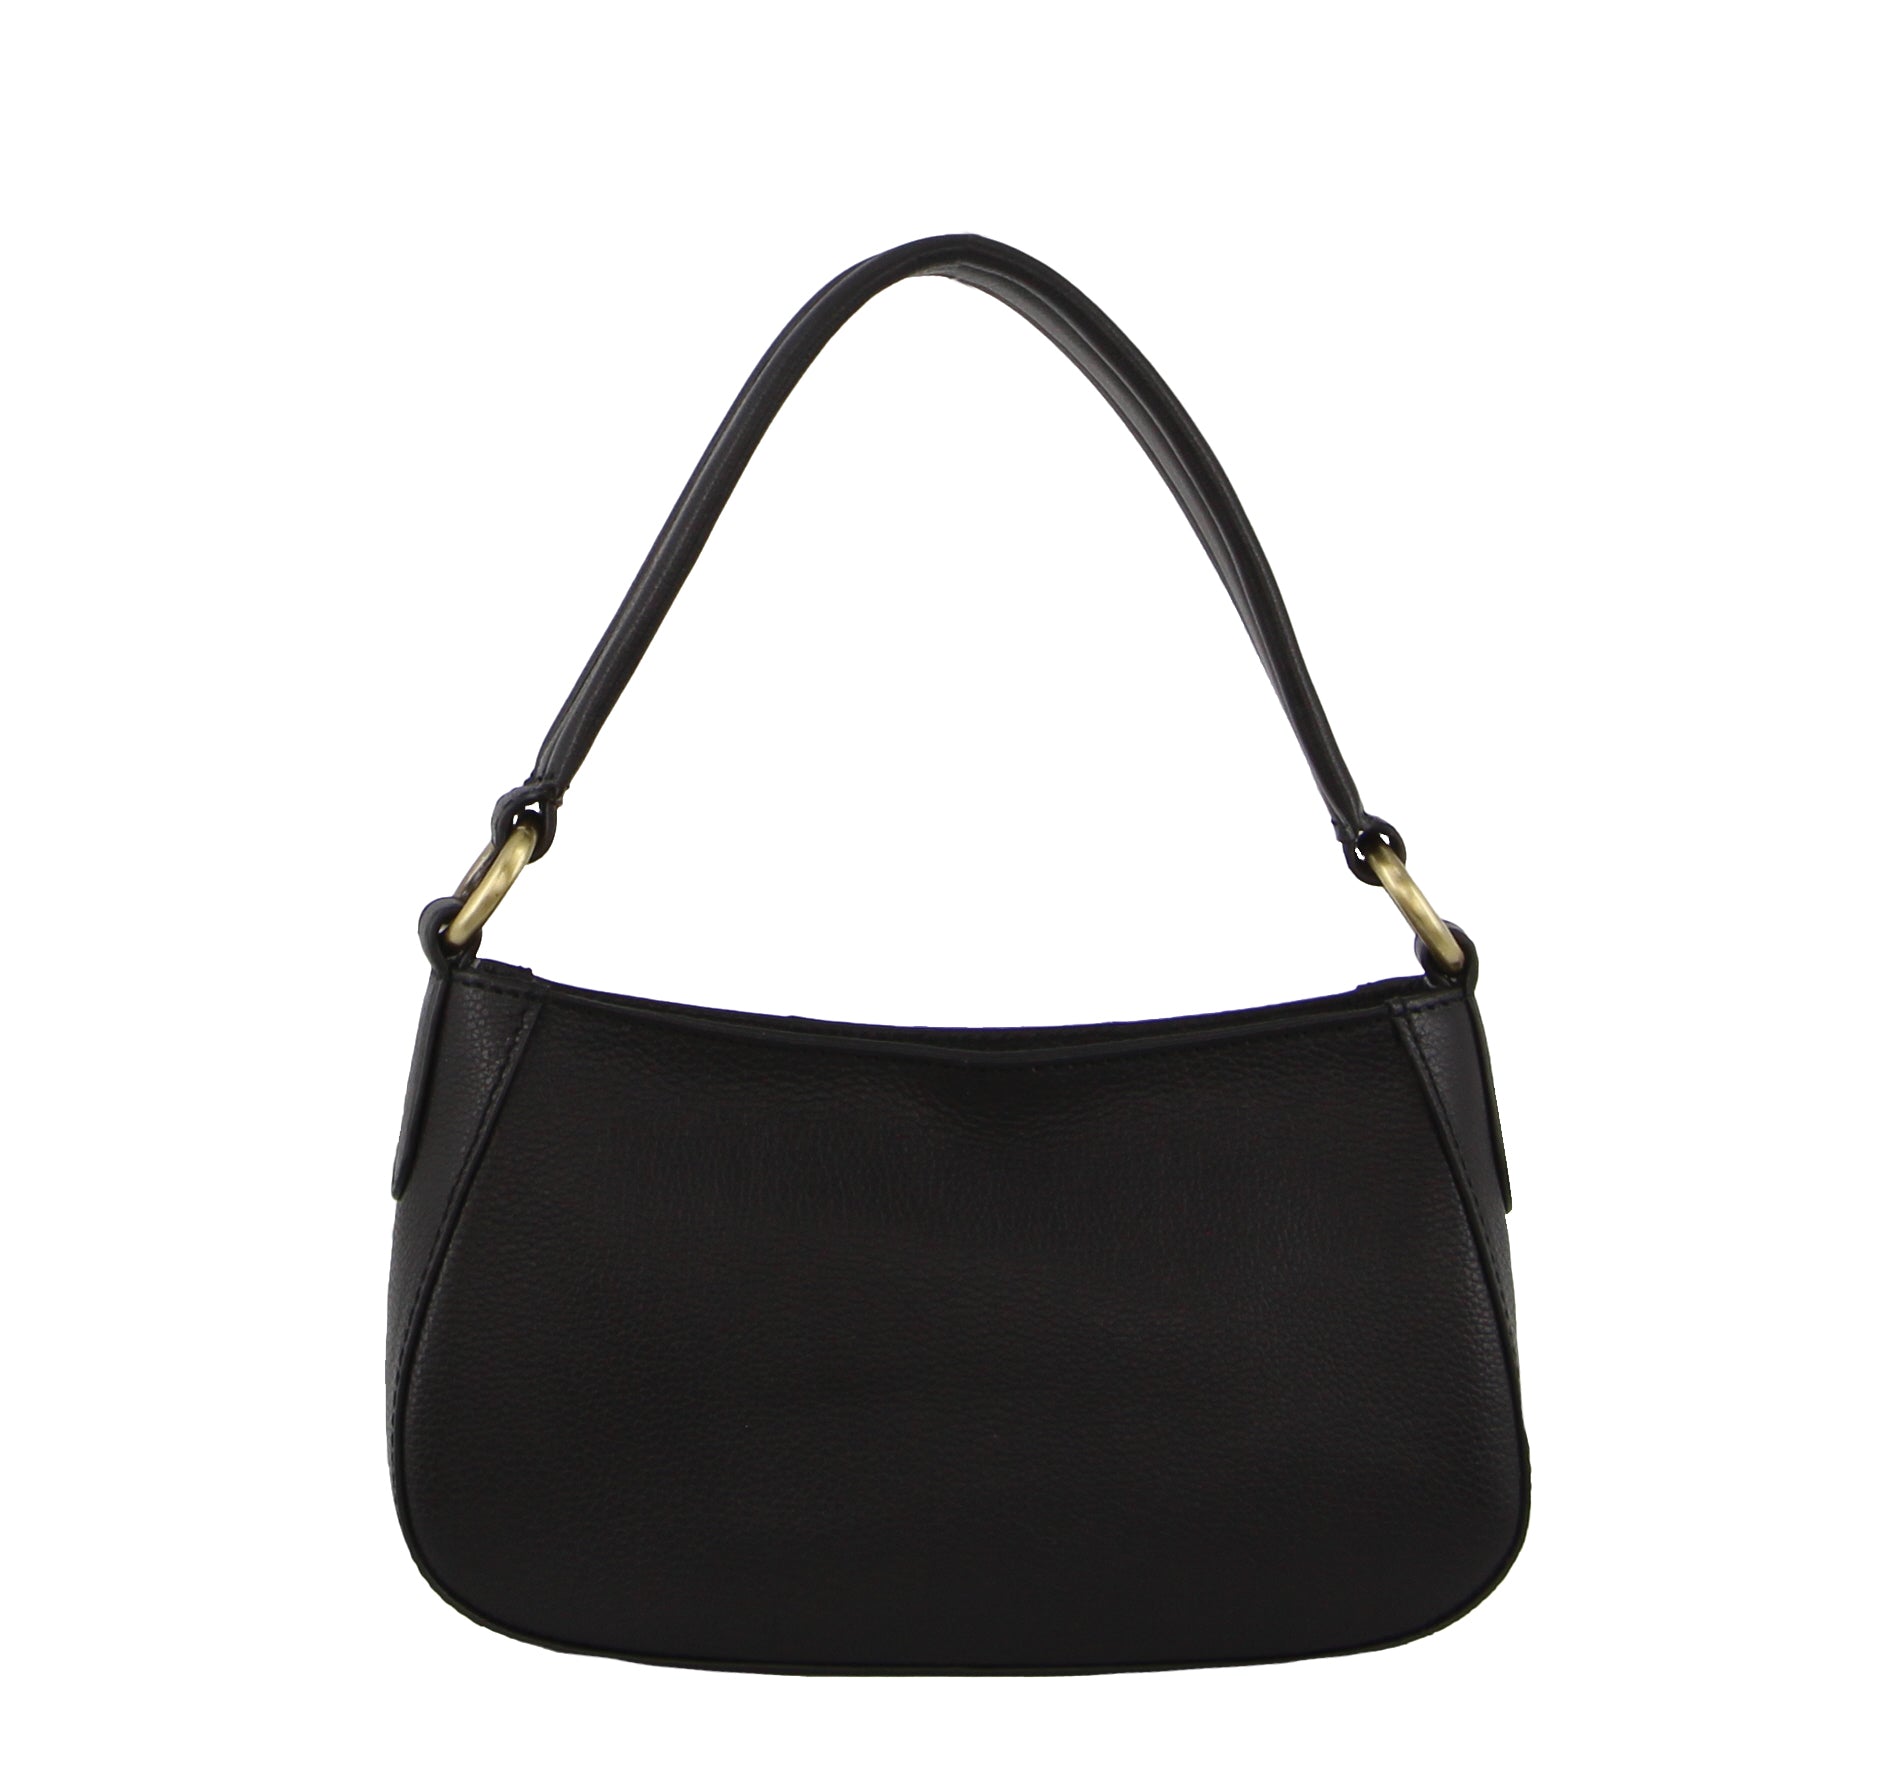 Pierre Cardin Ladies Leather Flap Over Bag in Black